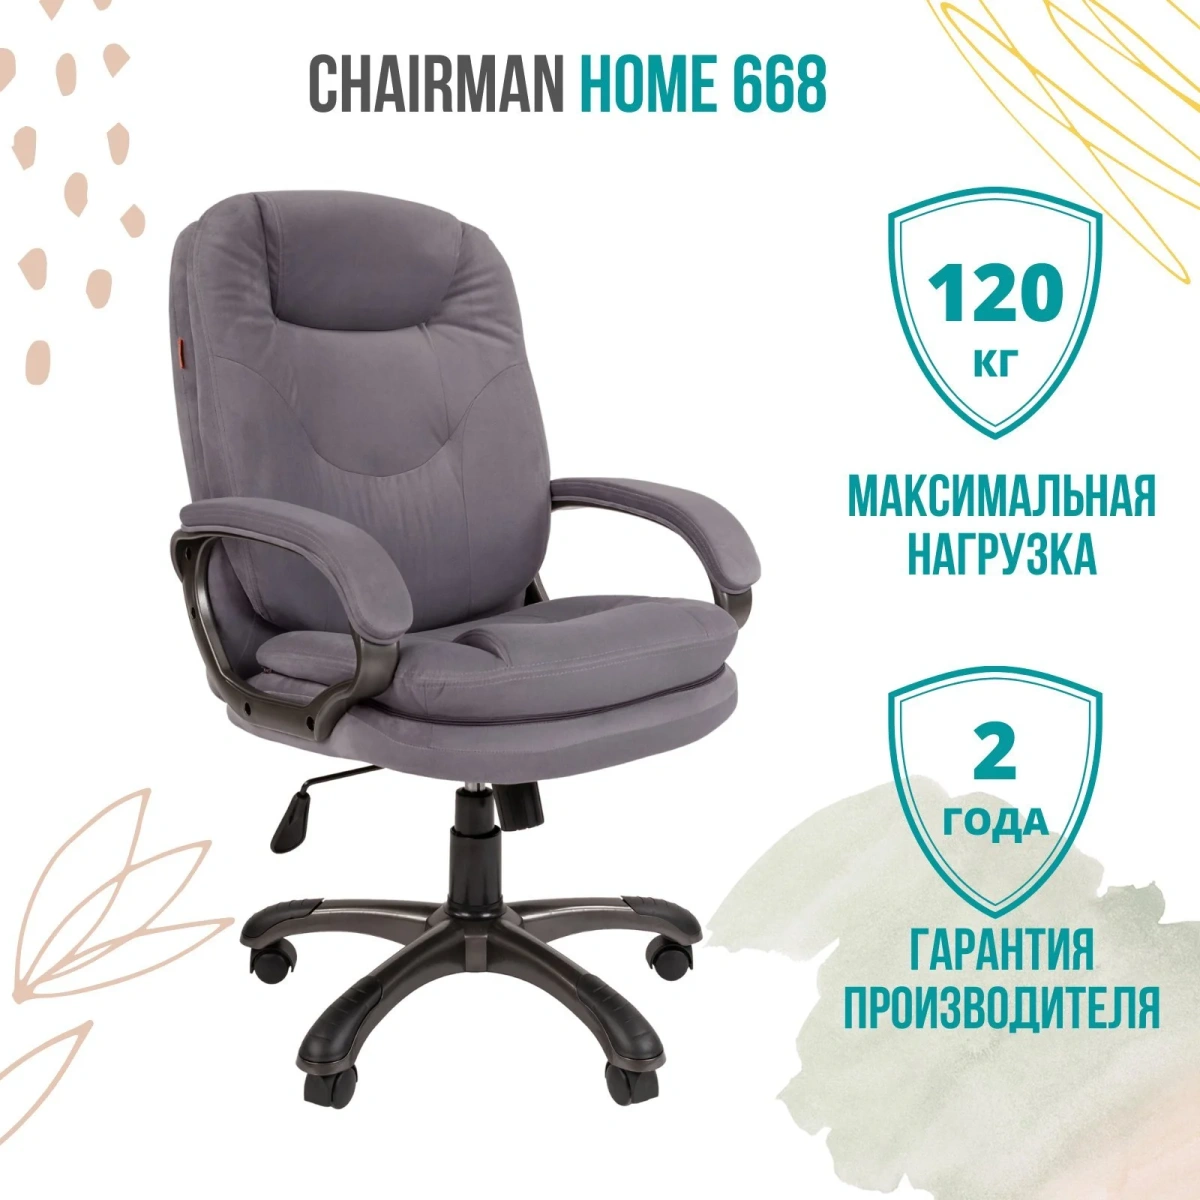 Офисное кресло CHAIRMAN HOME 668, ткань велюр, серый